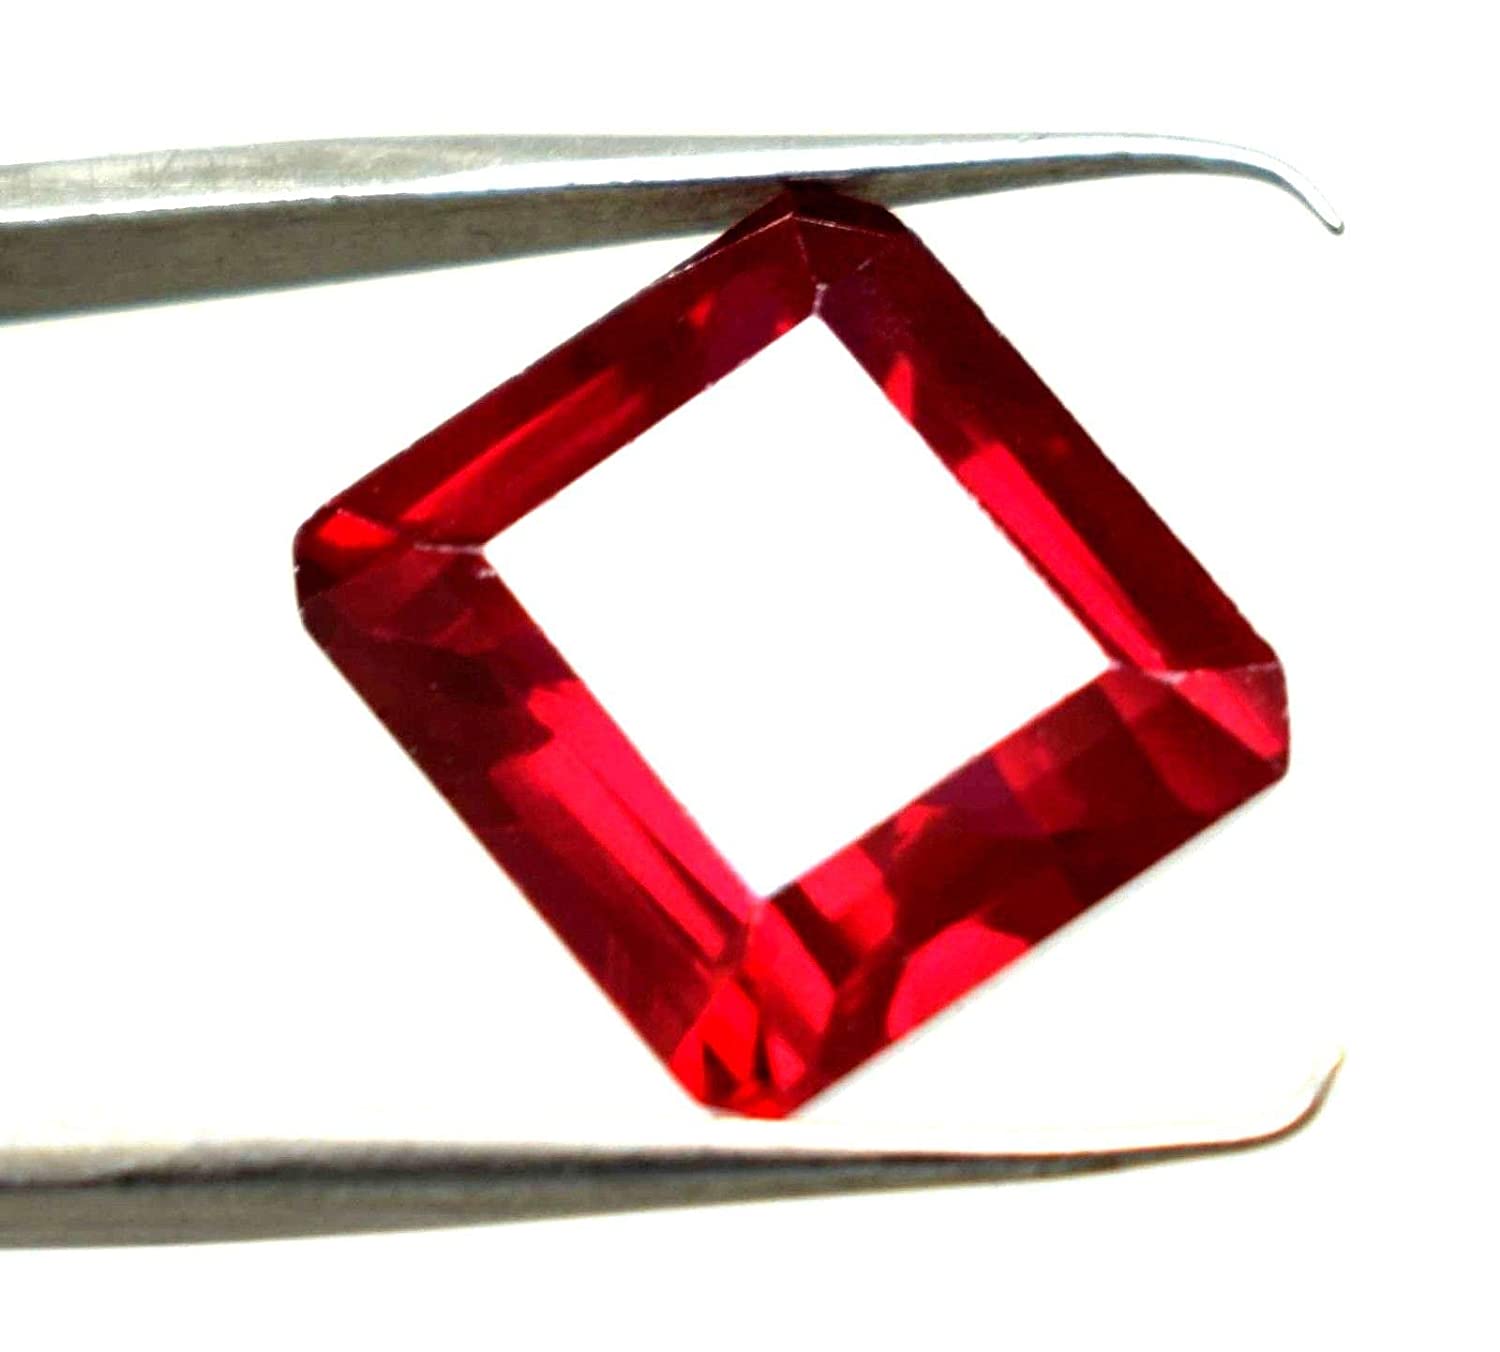 Azagems 13.25 Ratti (12.80 Carat) Ruby (Manikya/Manik/Maanik Stone) 100% Original Certified Natural Gemstone AAA Quality